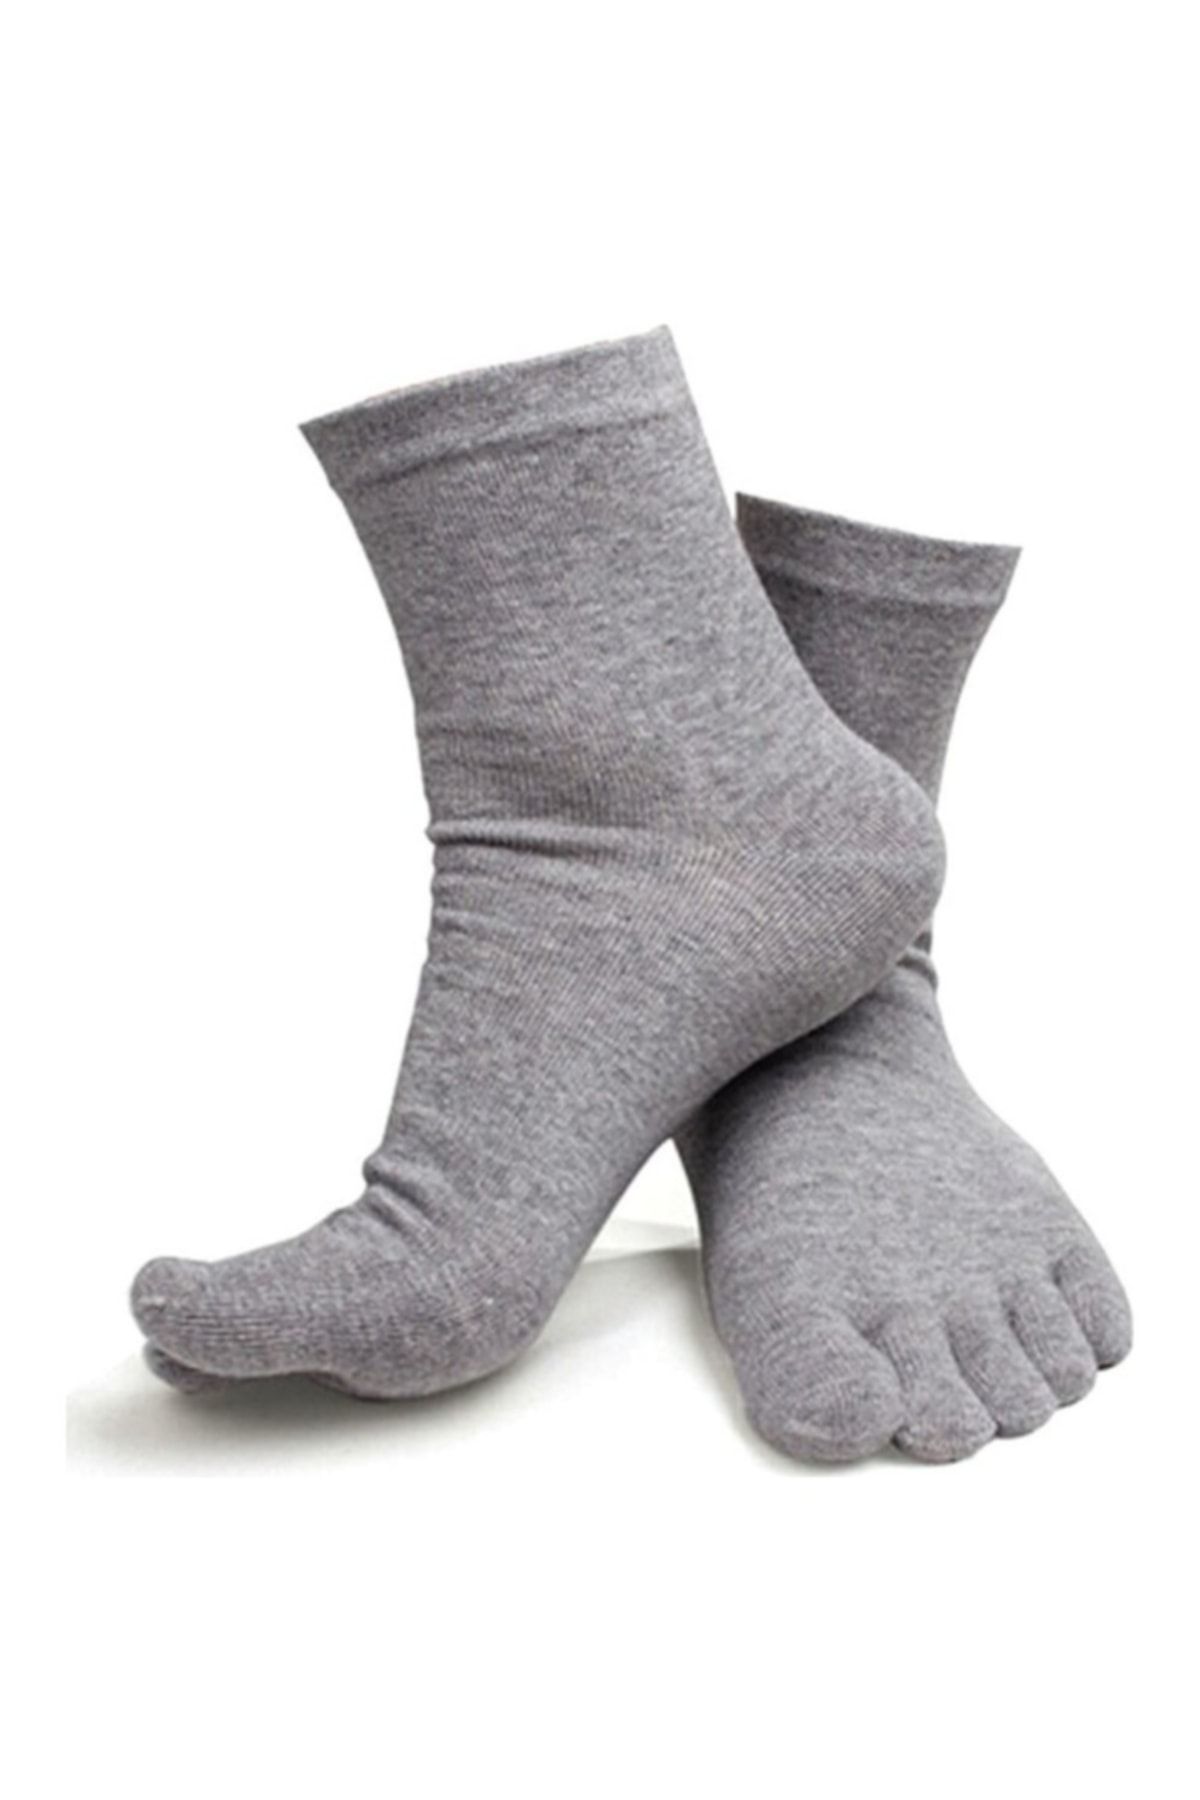 Sersu Pamuklu 6'lı Parmaklı Hijyenik Koku Yapmaz-mantar Çorap